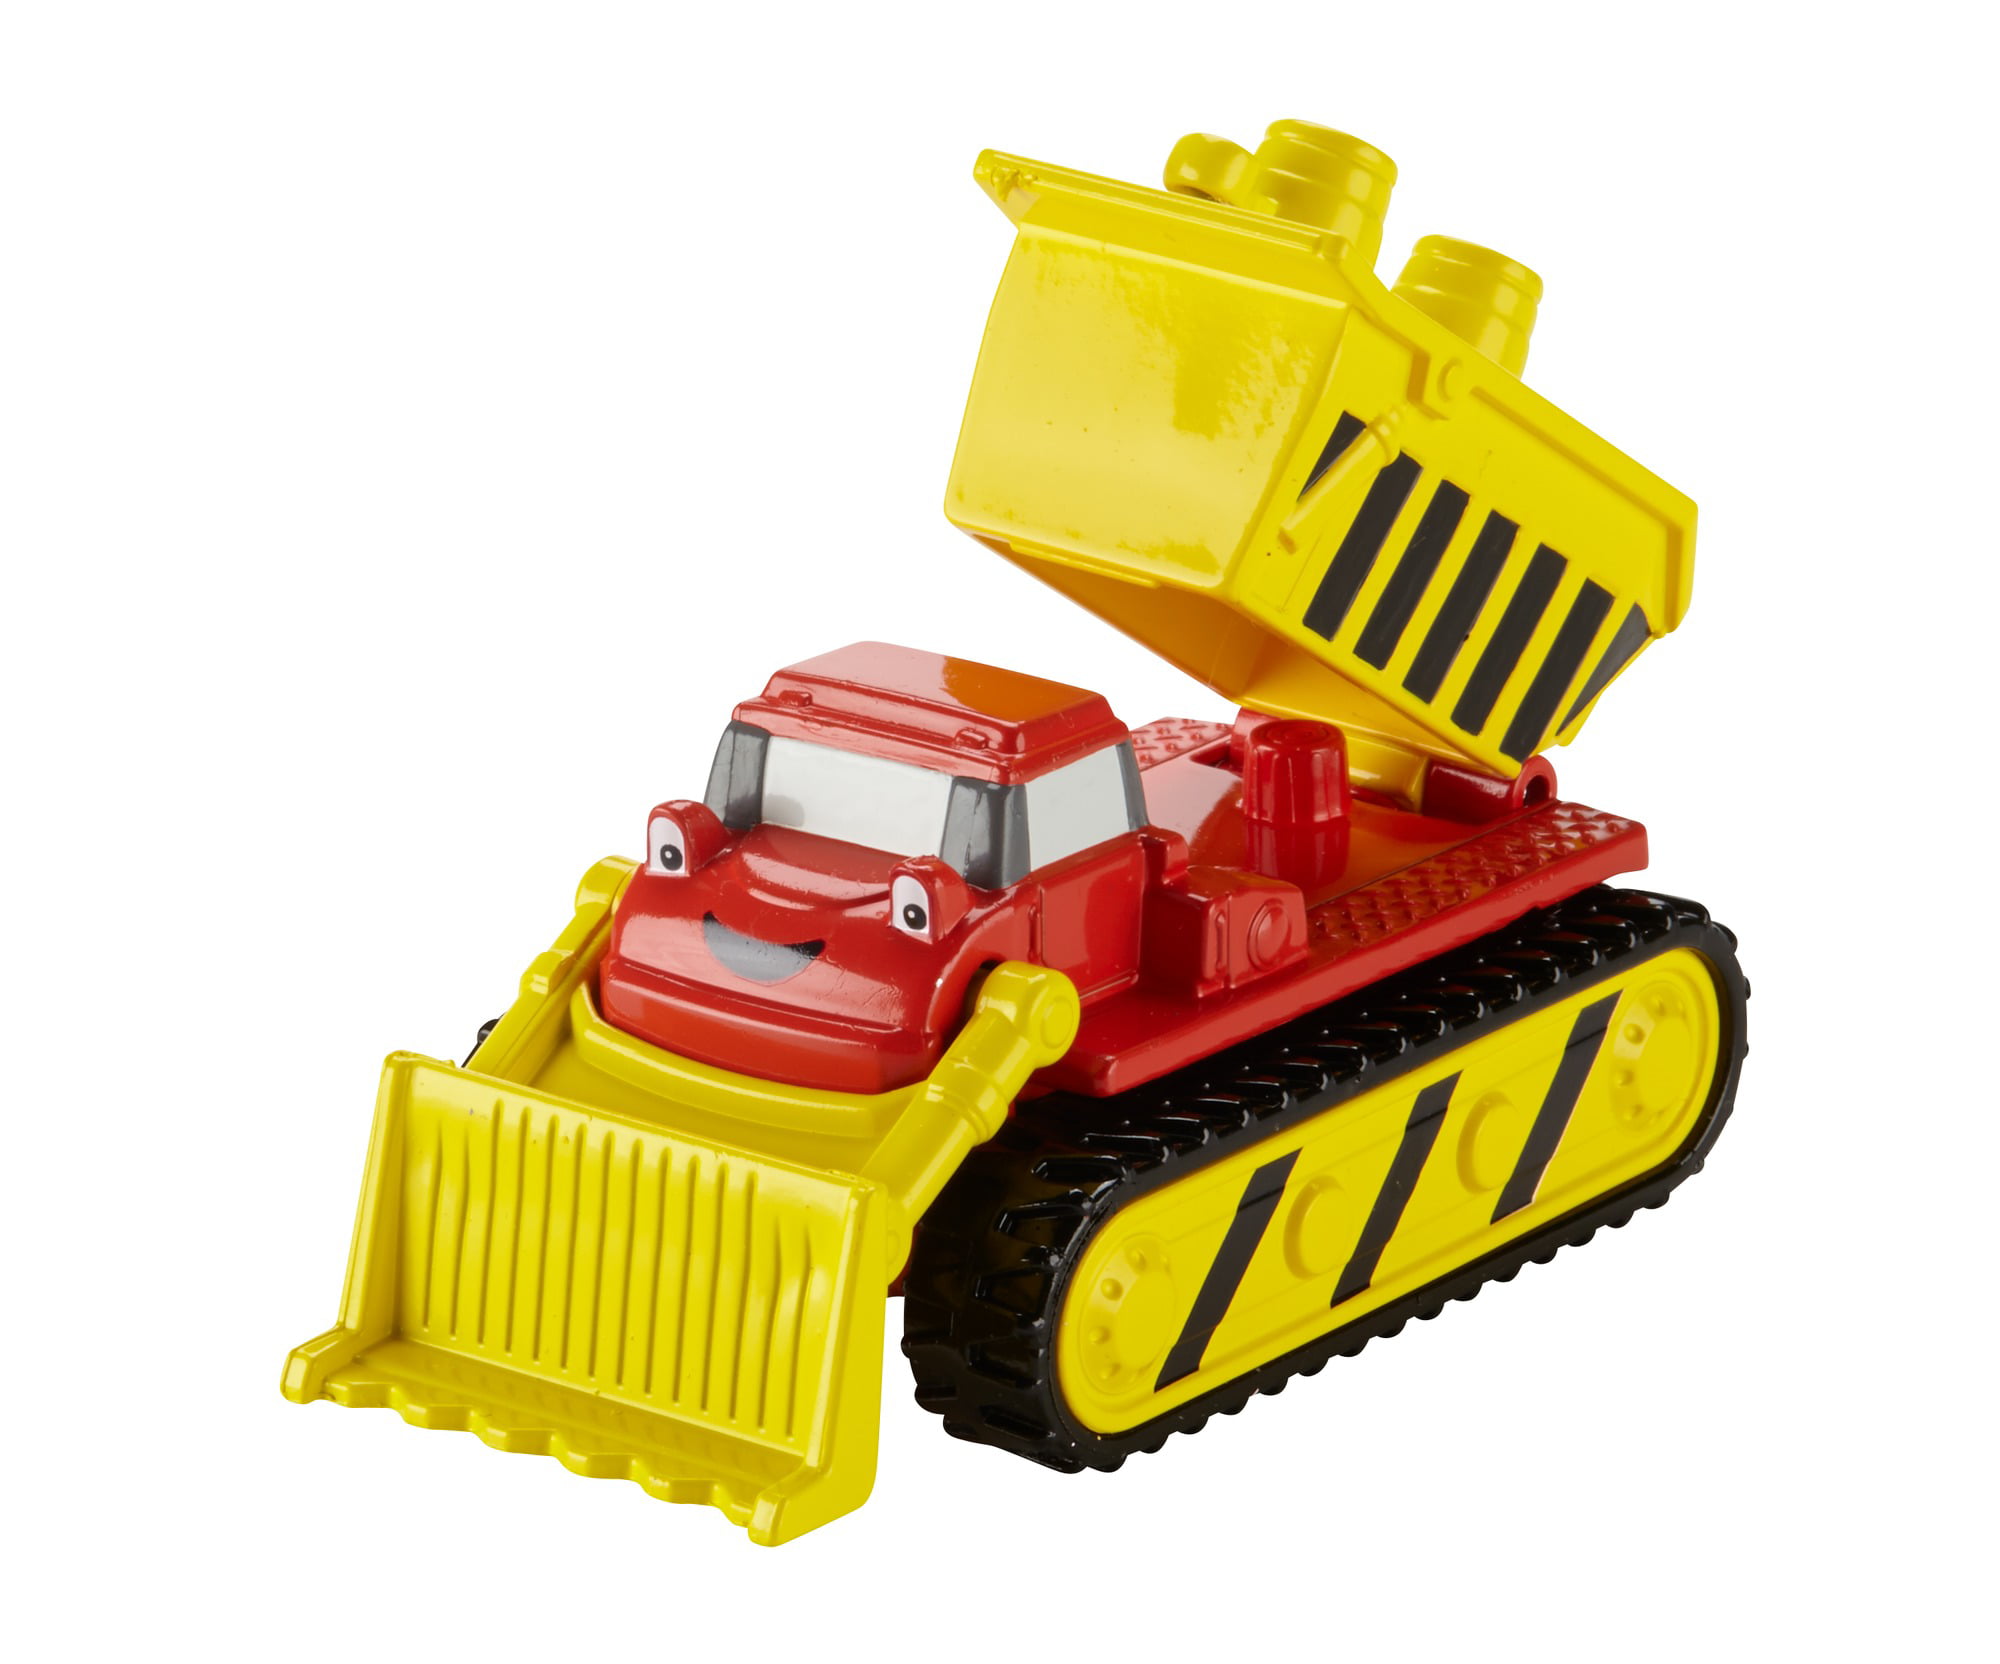 Lego Duplo Bulldozer Muck Construction Vehicle Bob the Builder Complete 